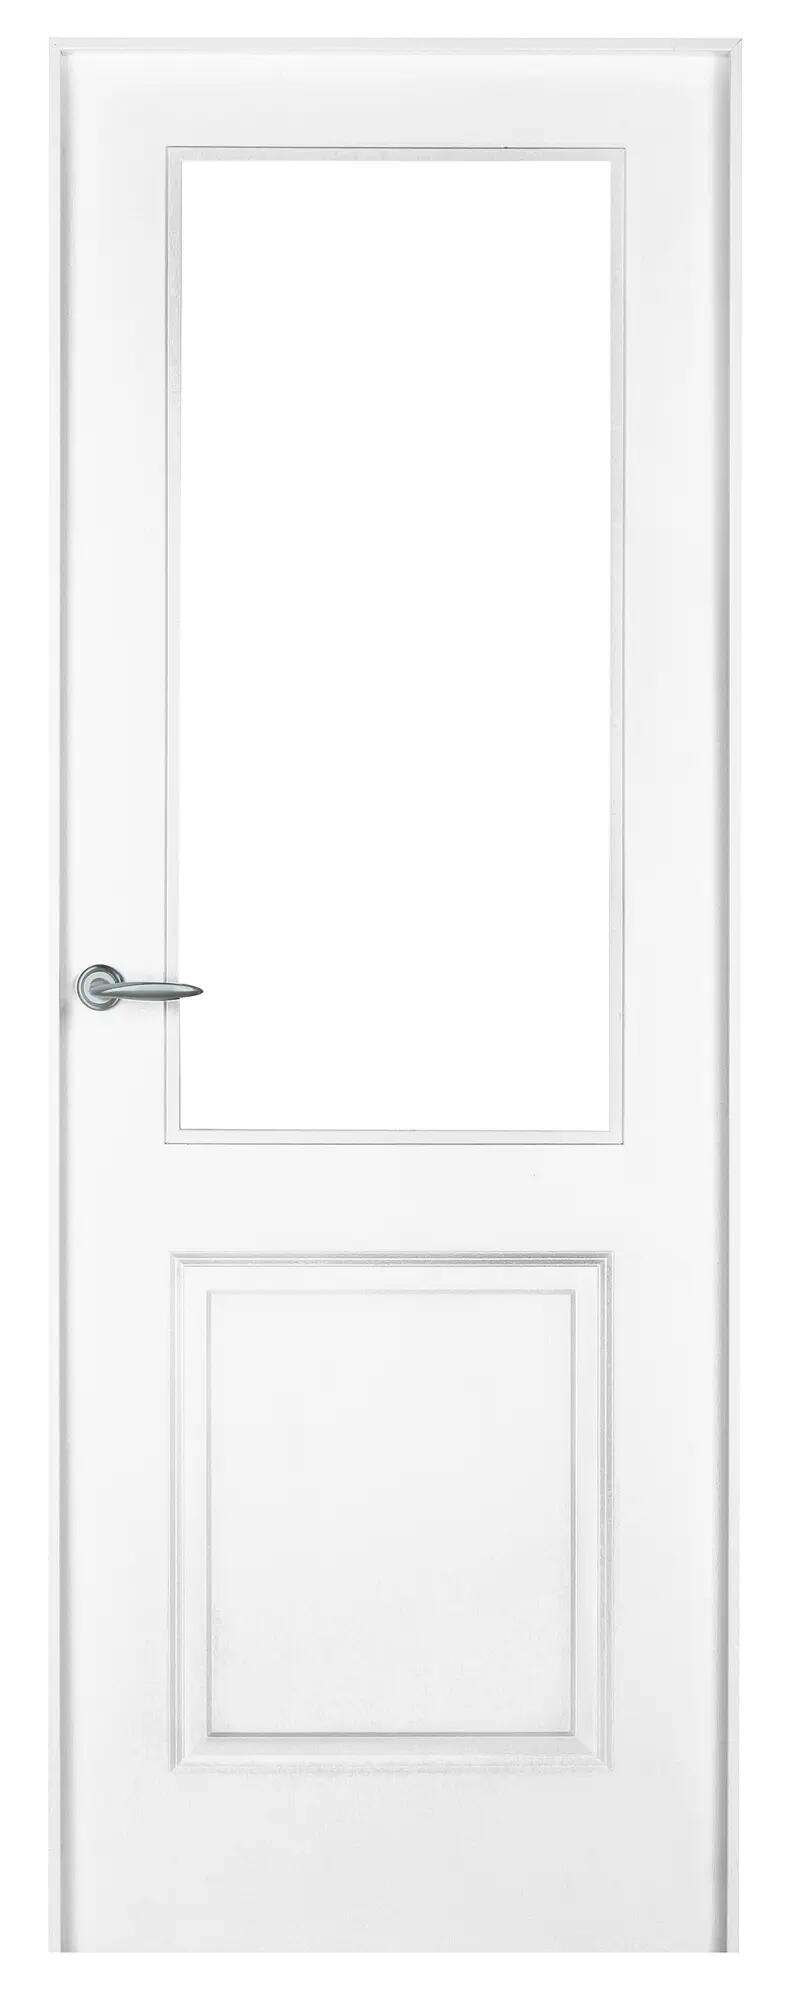 Puerta bonn blanco apertura derecha con cristal 82.5cm